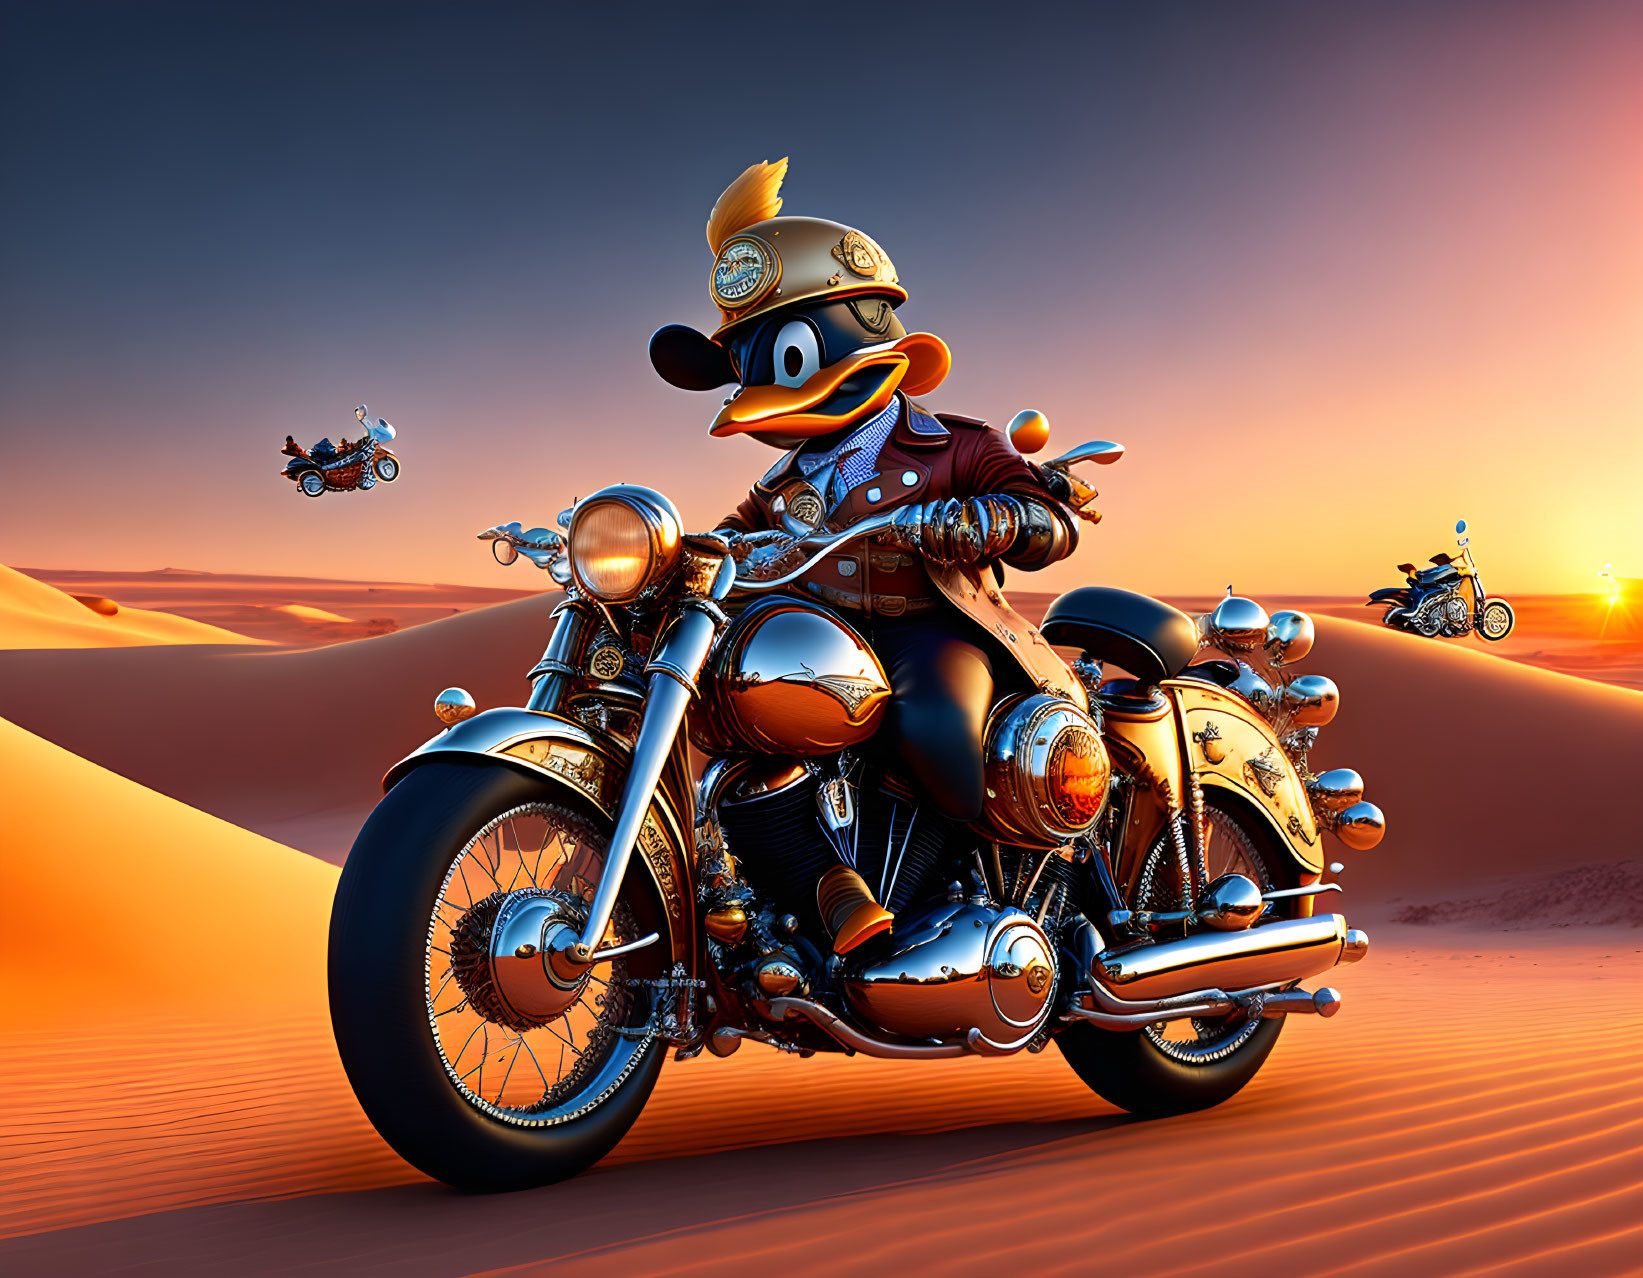 Duck character in biker attire on motorcycle in desert landscape